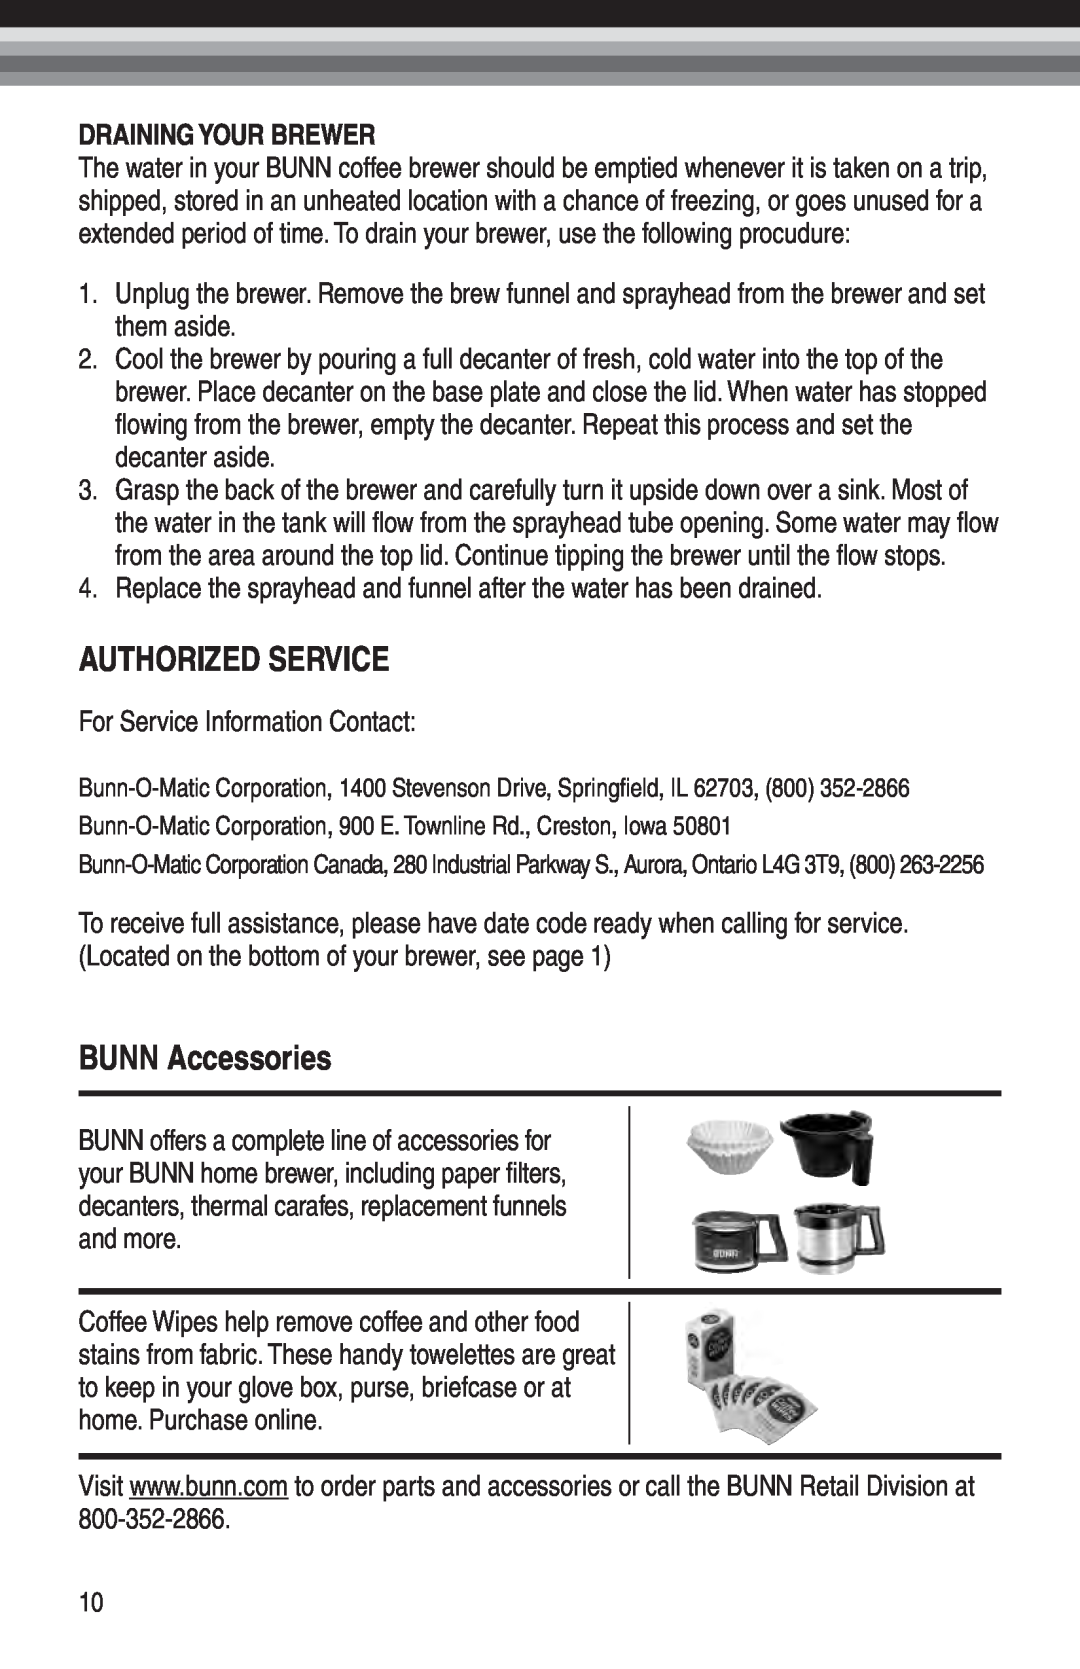 Bunn GRX manual Authorized Service, BUNN Accessories, Draining Your Brewer 